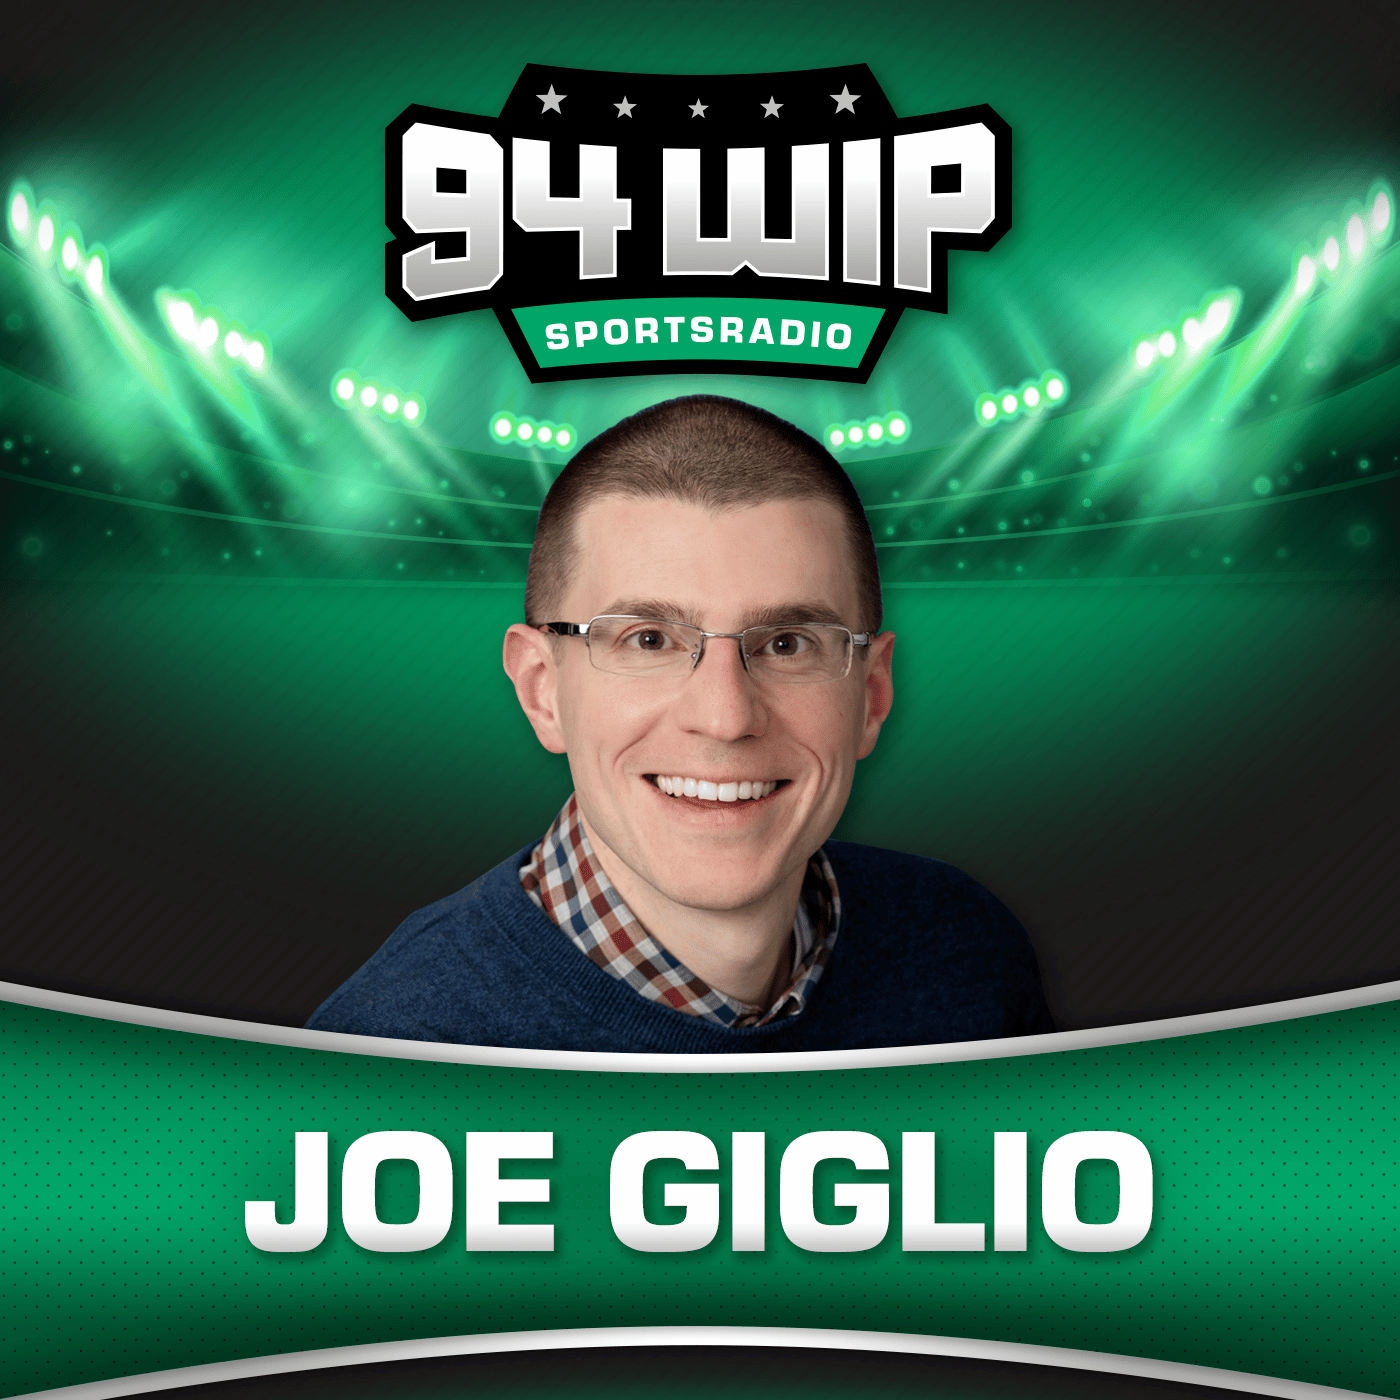 RADIO WARS: Joe Giglio and Hugh Douglas is the New WIP Midday Show